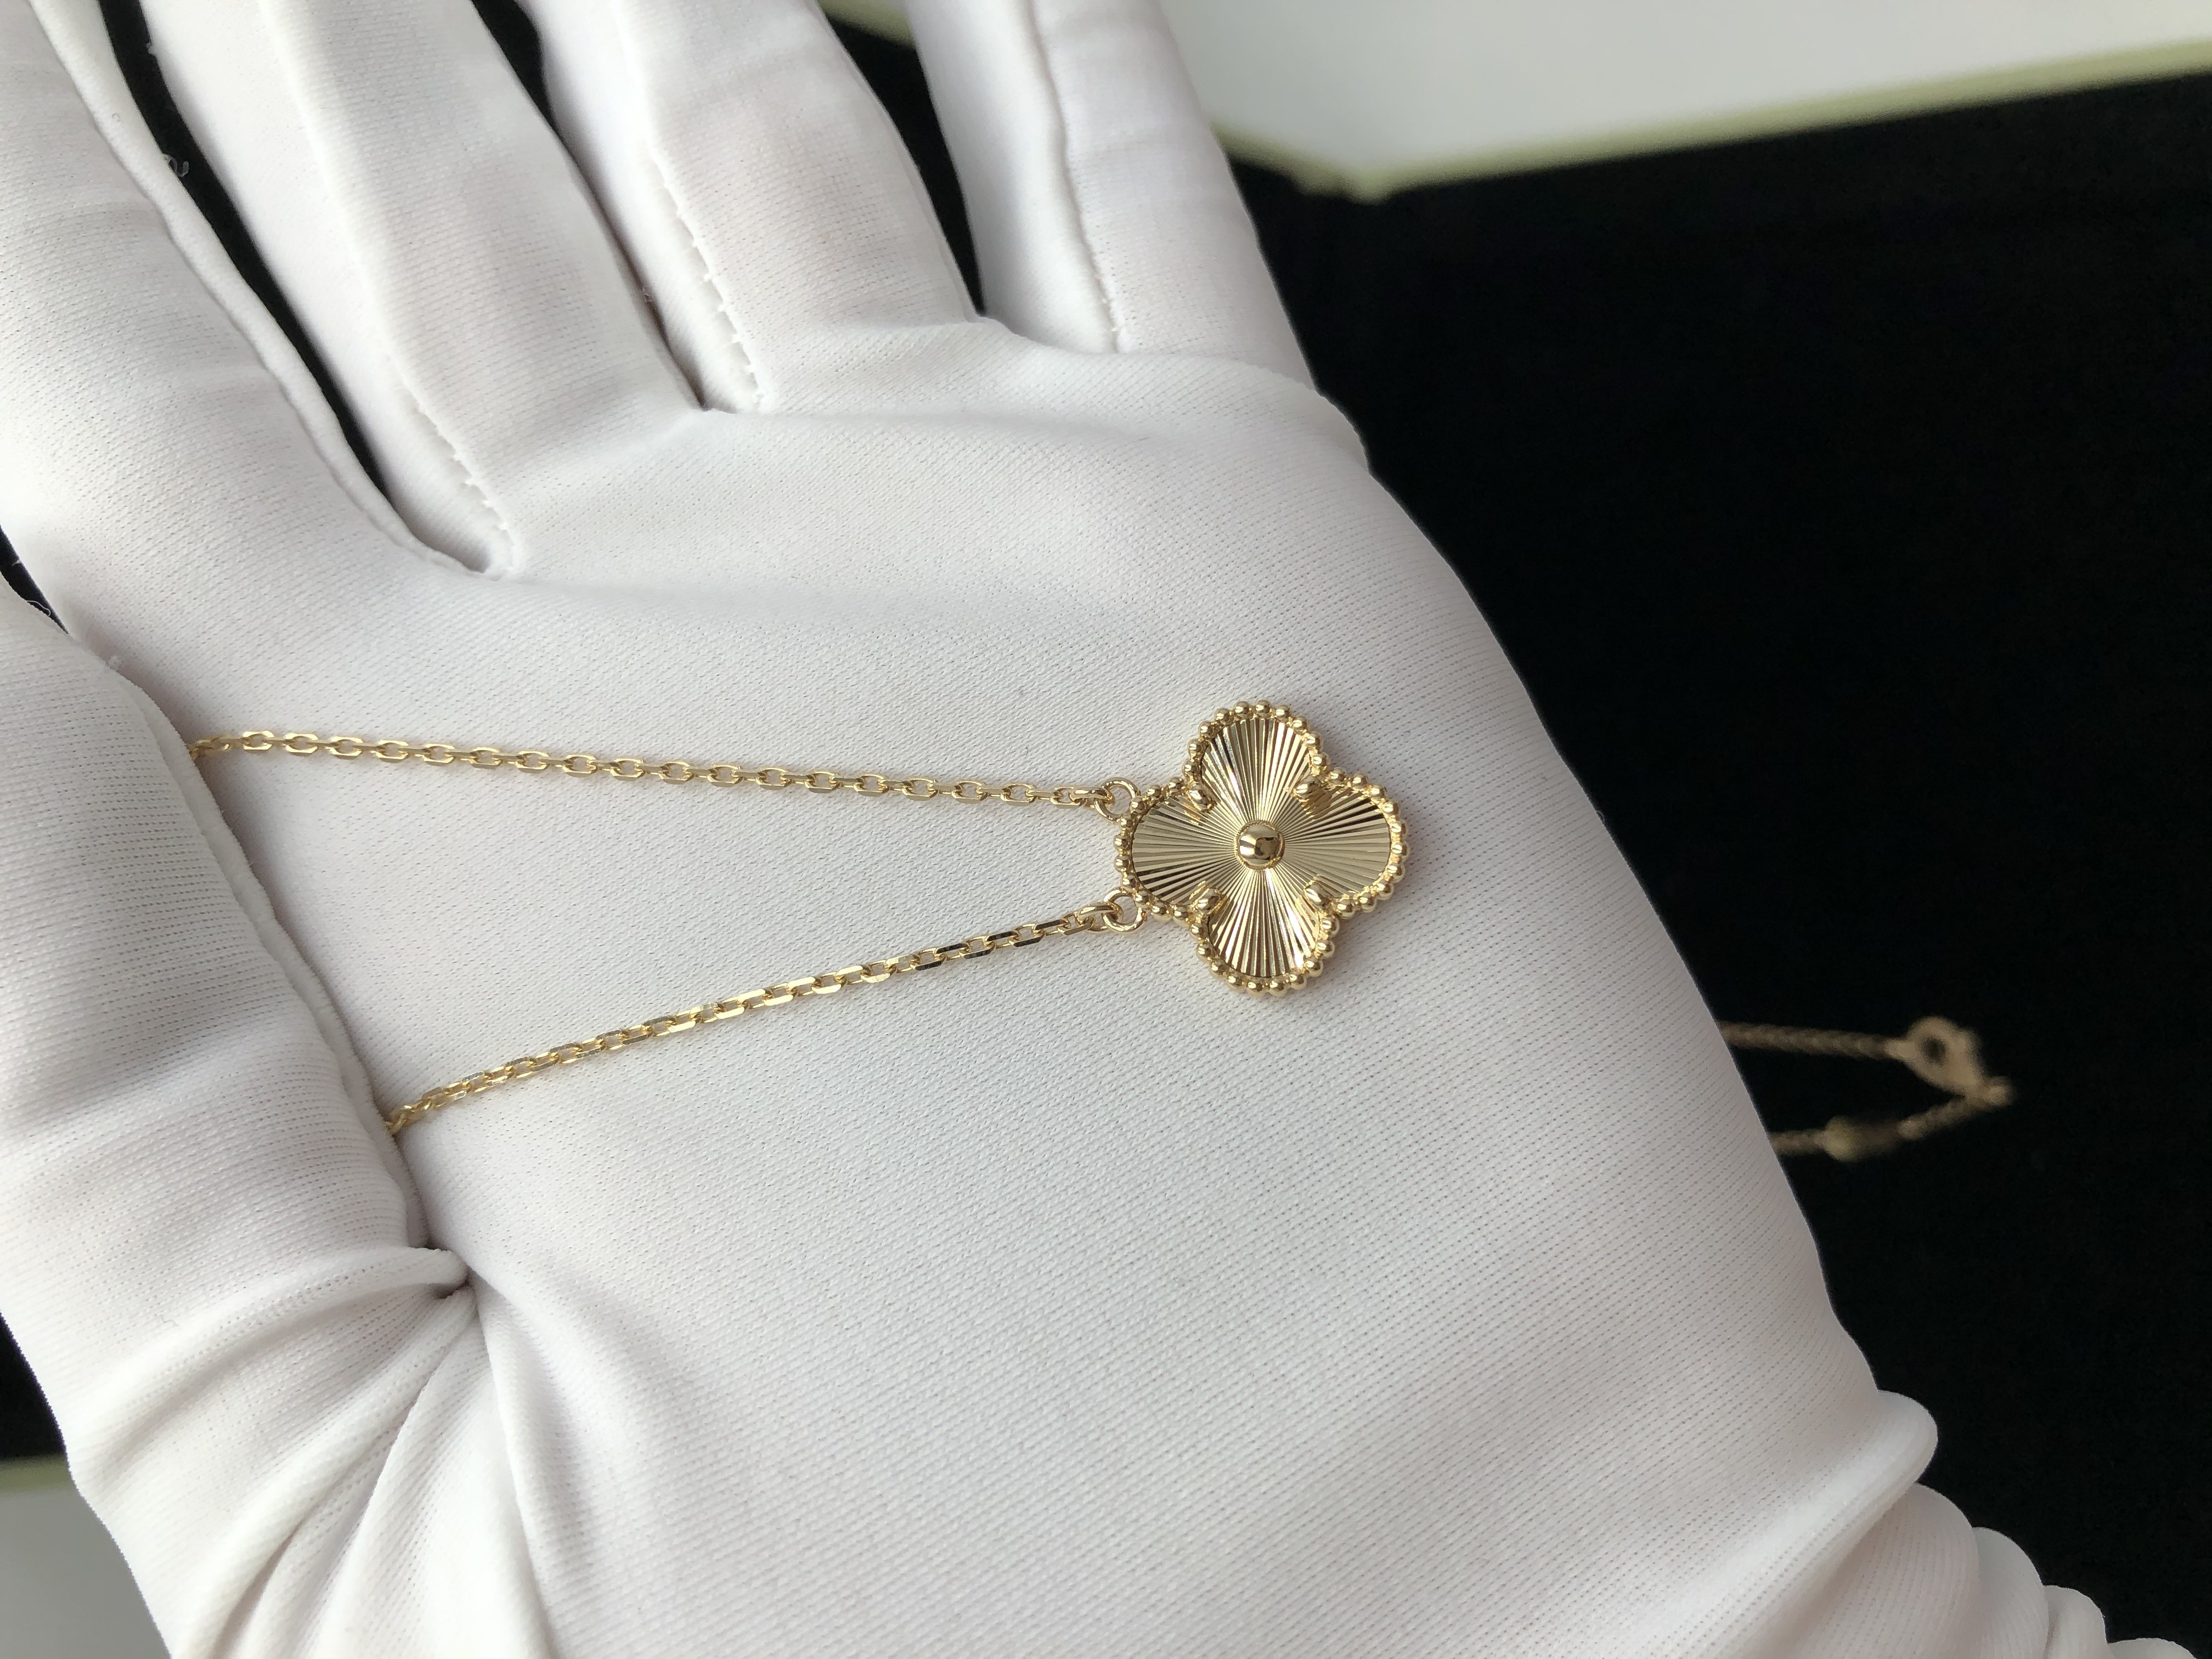  VCARP4KL00 42cm Chain 18K Gold Necklace Vintage For Girlfriend Manufactures